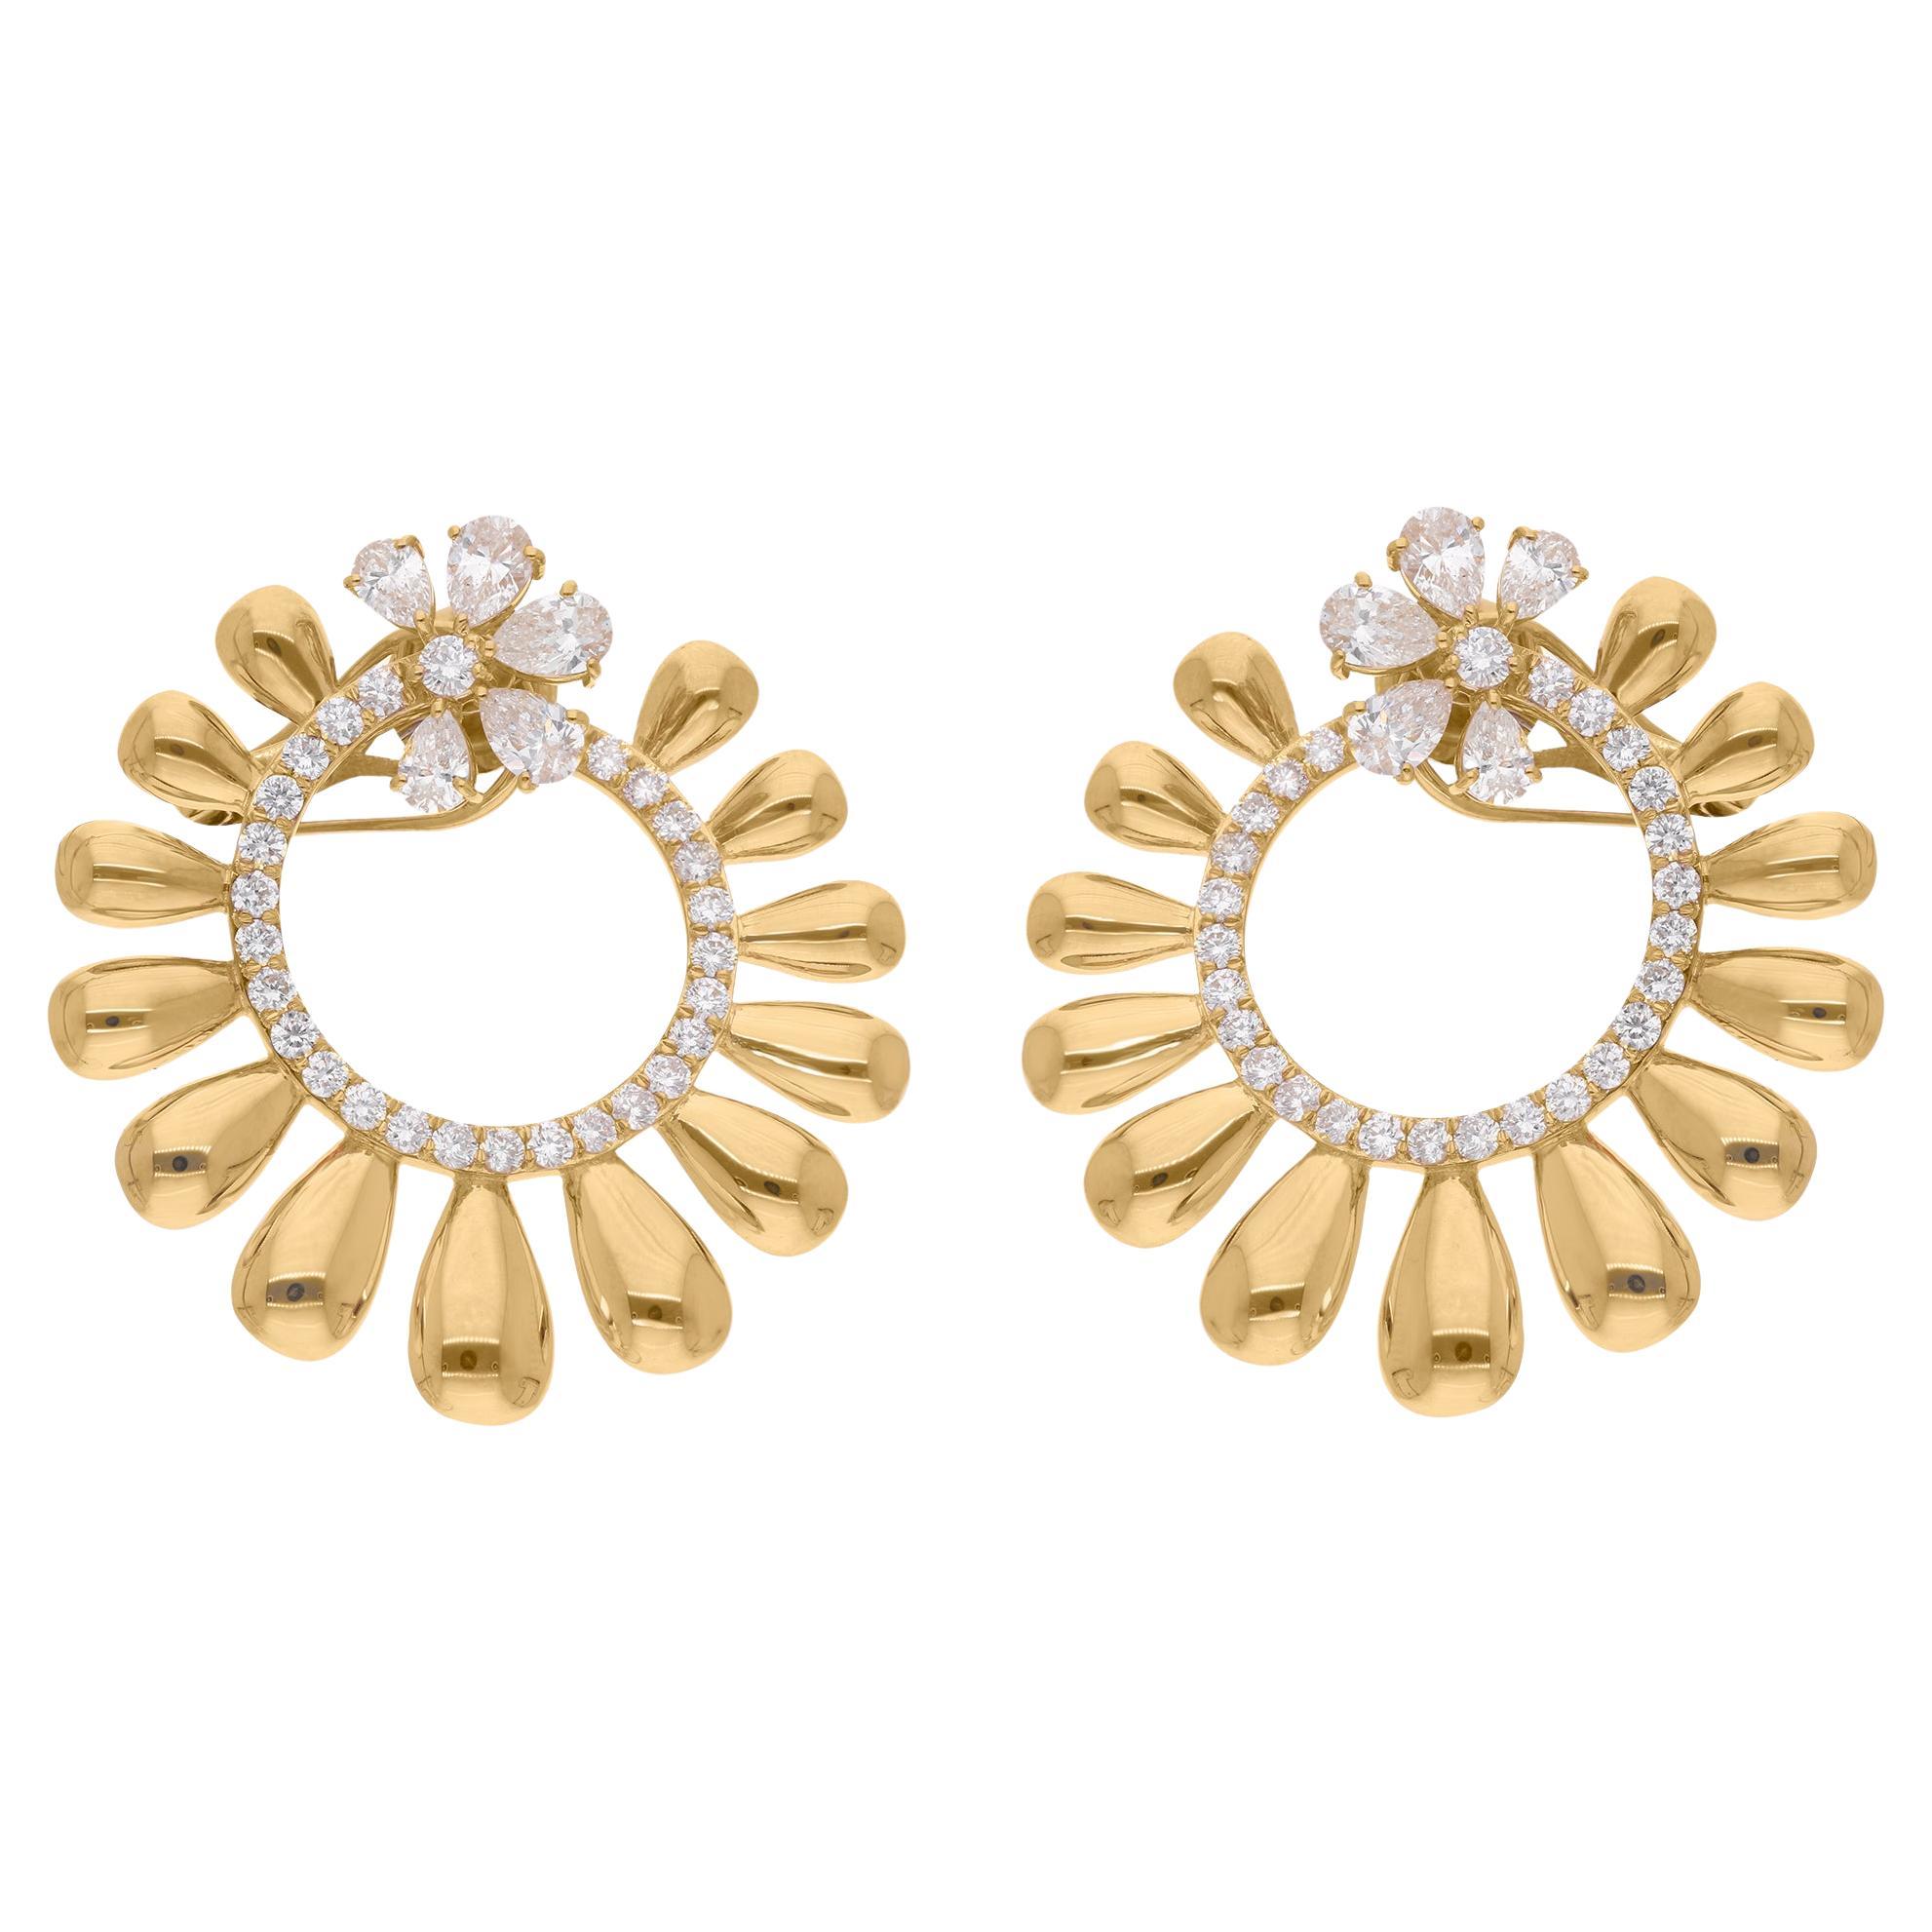 Real 3.79 Carat Diamond Pave Hoop Earrings 14 Karat Yellow Gold Handmade Jewelry For Sale